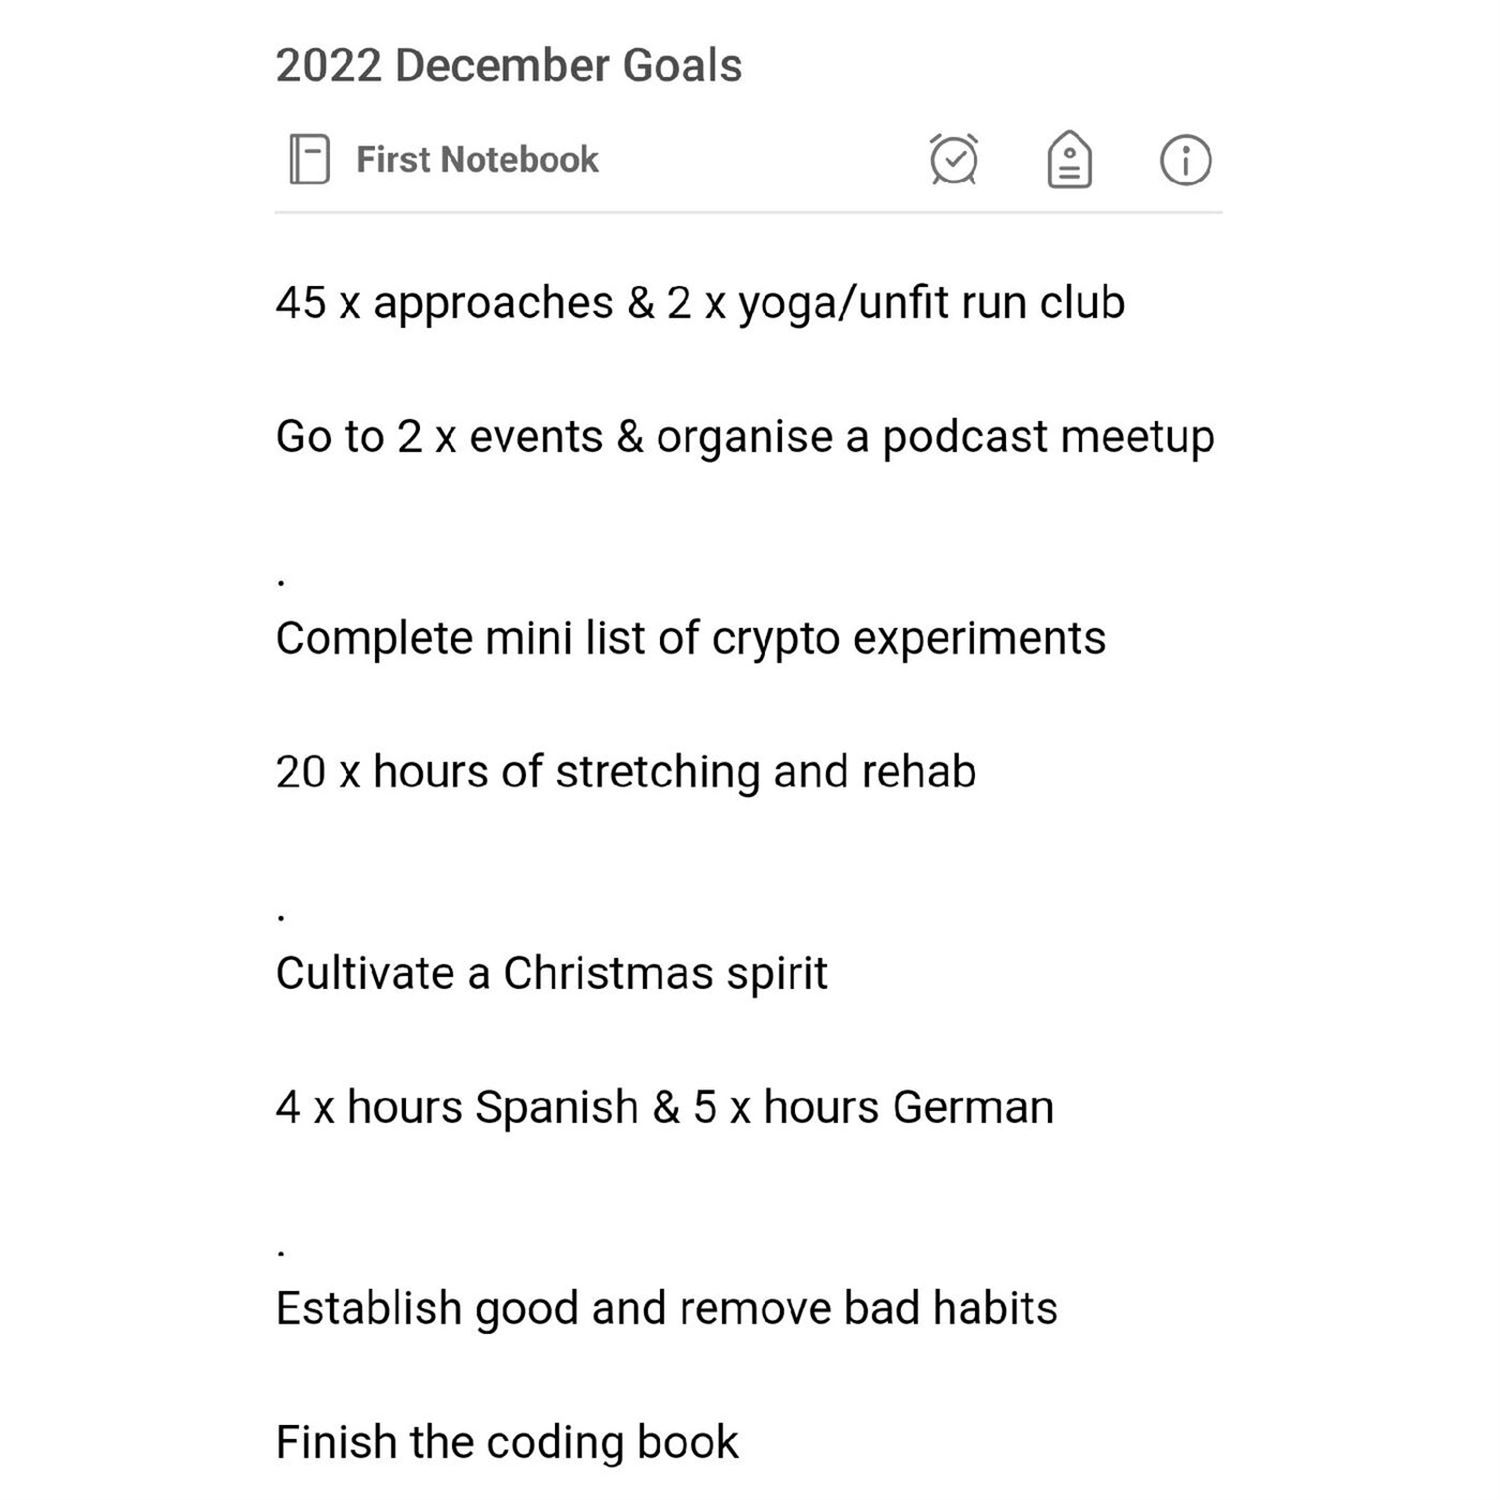 Kyrin's December Goals